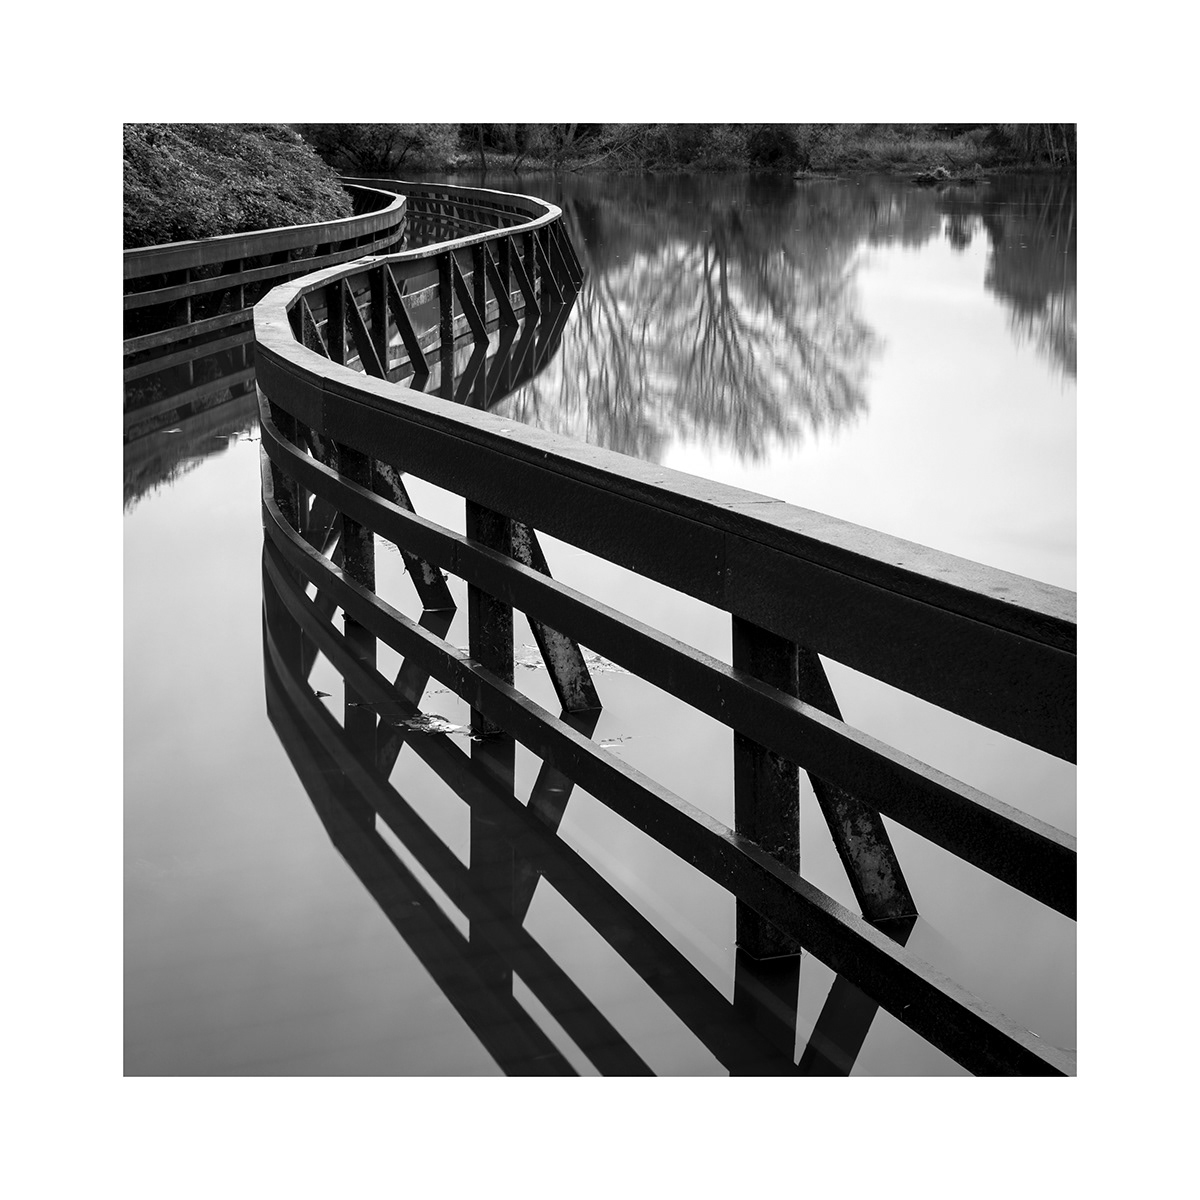 Landscape Photography  photographer Nature monochrome black and white